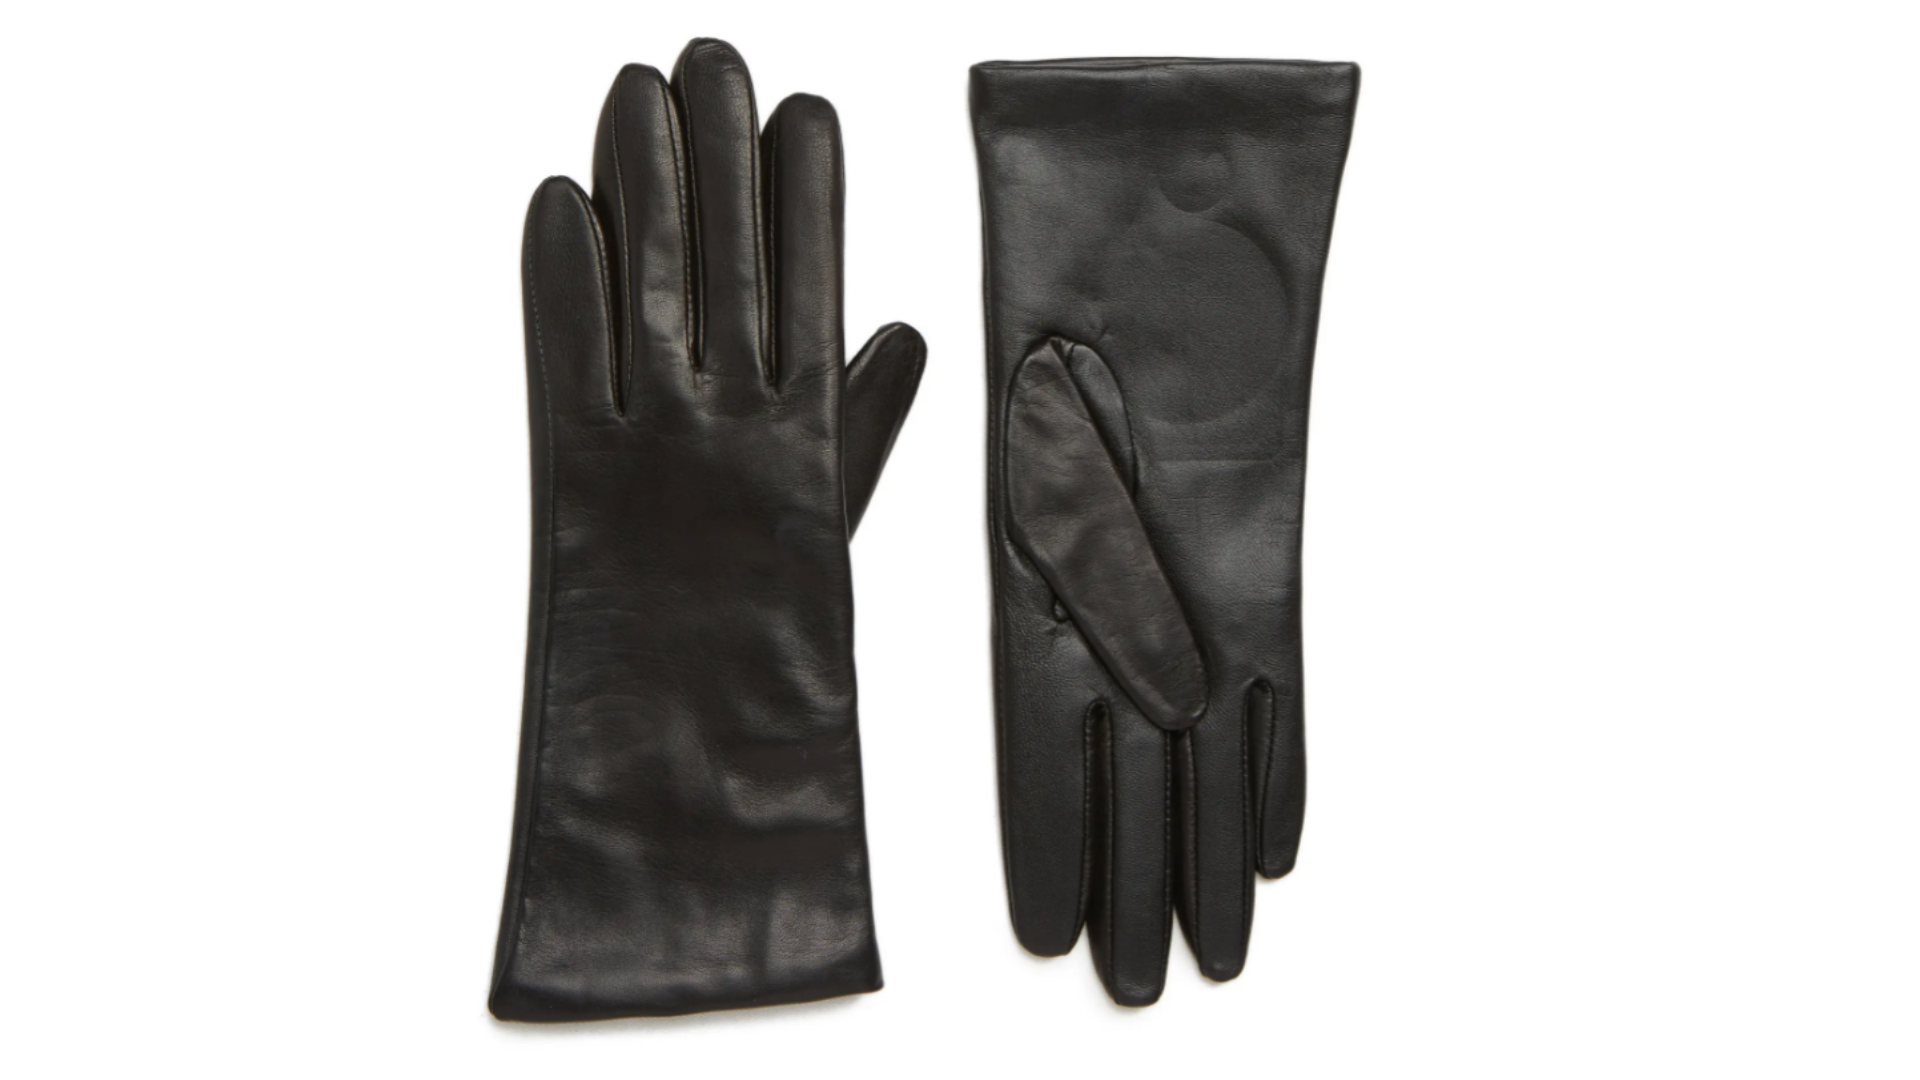 Nordstrom best winter gloves